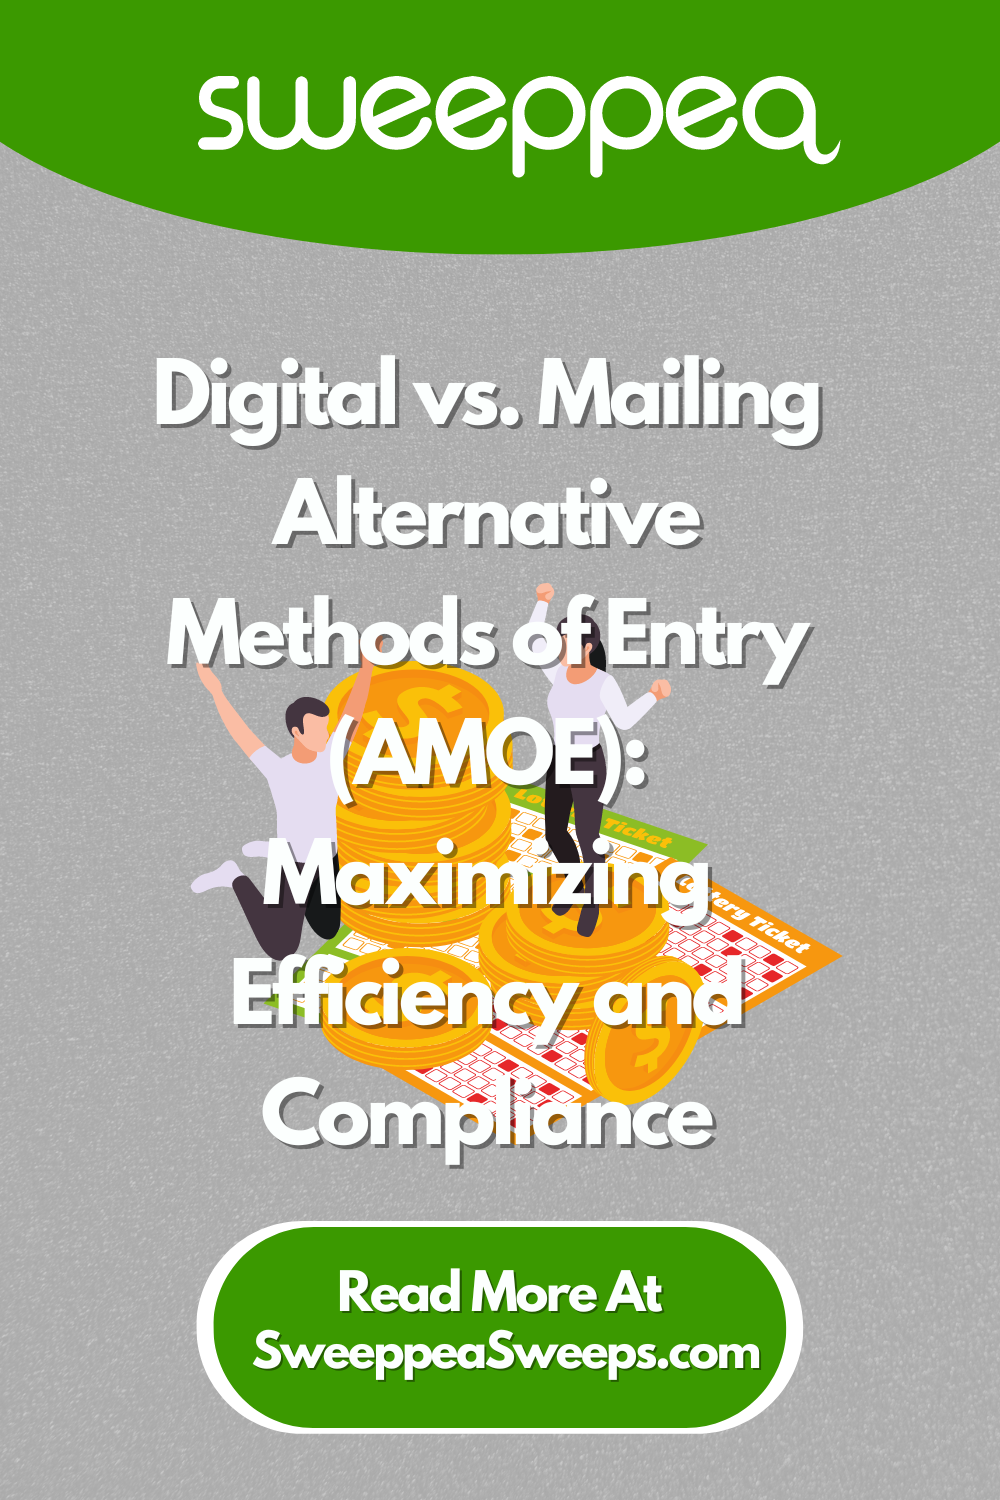 Digital vs. Mailing Alternative Methods of Entry (AMOE) Maximizing Efficiency and Compliance